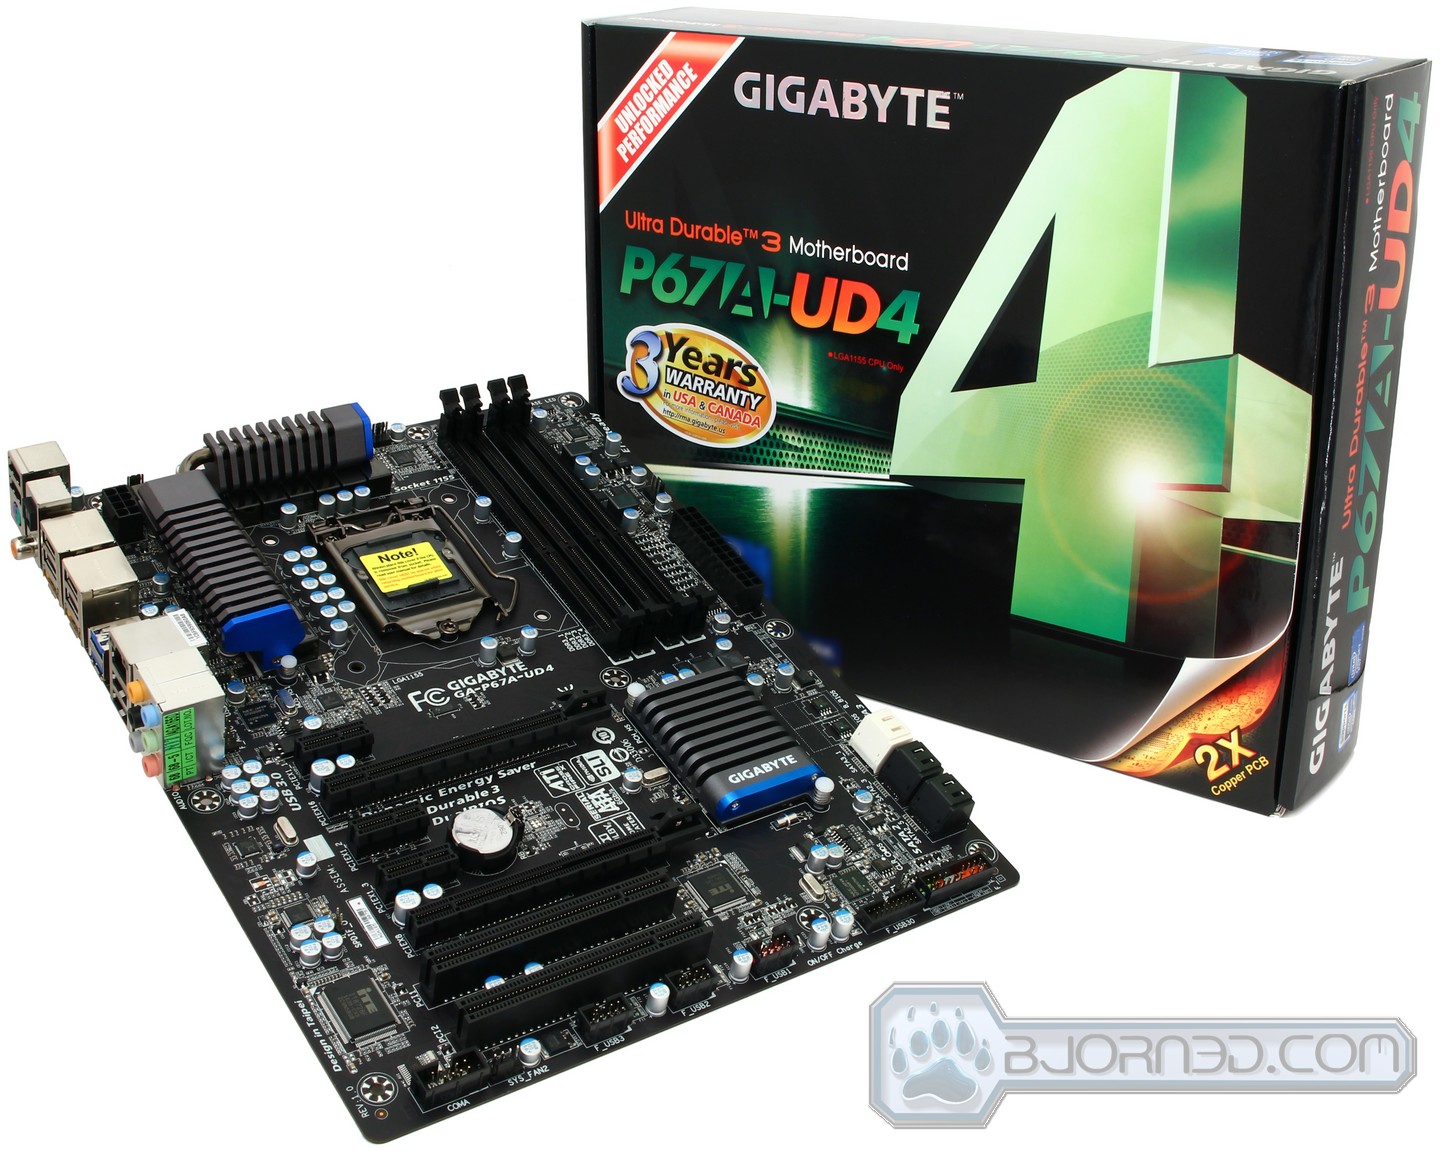 intel 82865g graphics controller xp